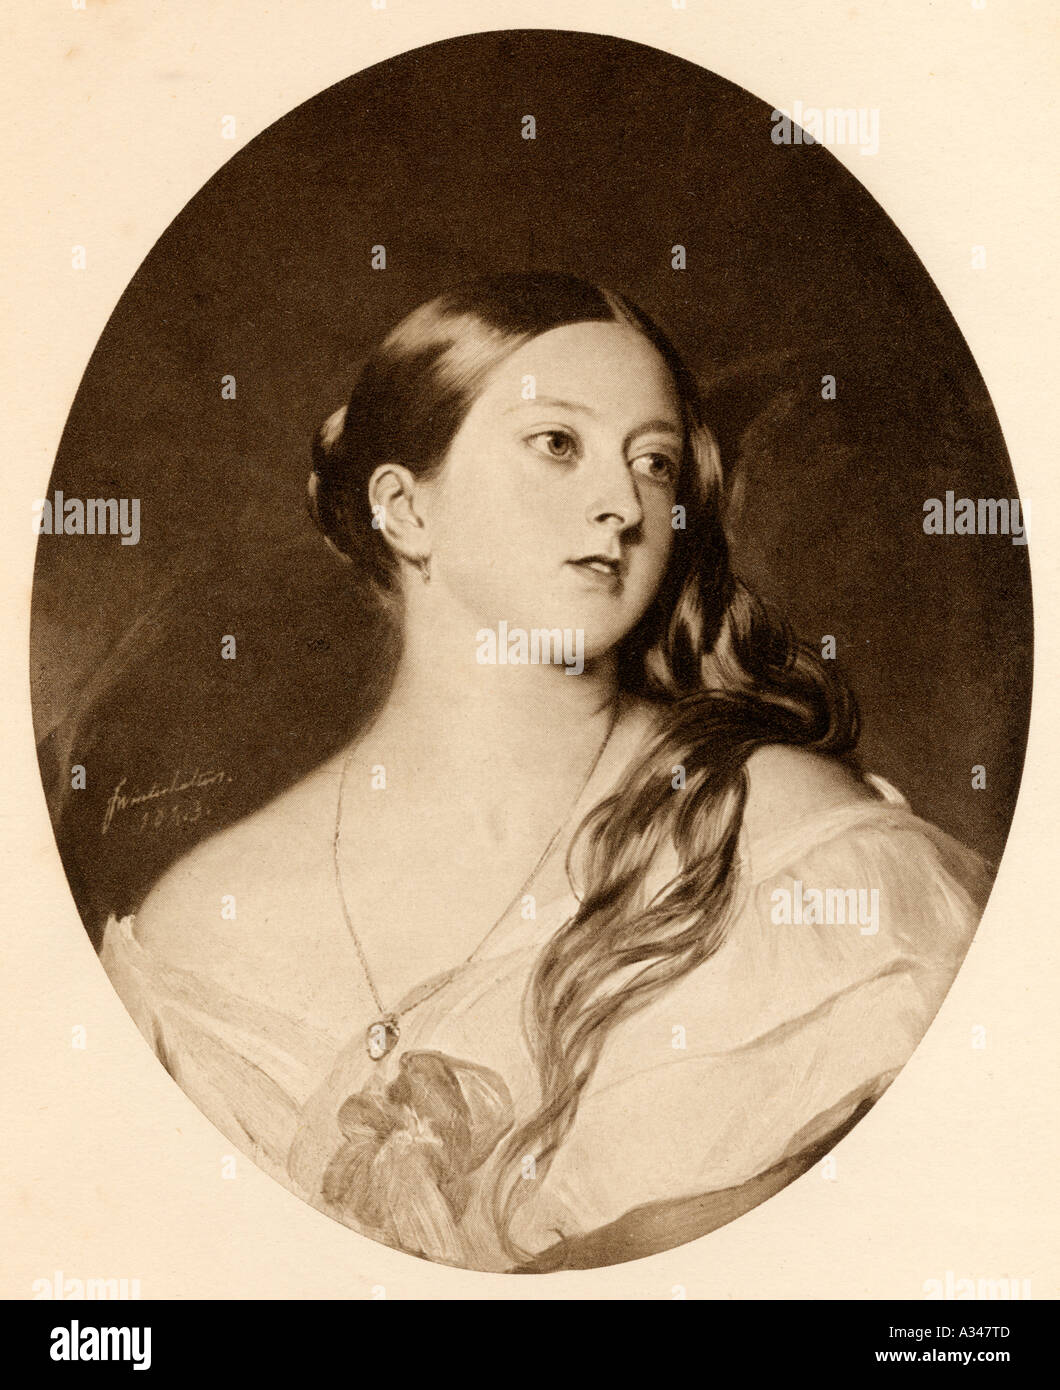 Princess Alexandrina Victoria of Saxe-Coburg, 1819 - 1901, seen here in 1843.  Future Queen Victoria. Stock Photo